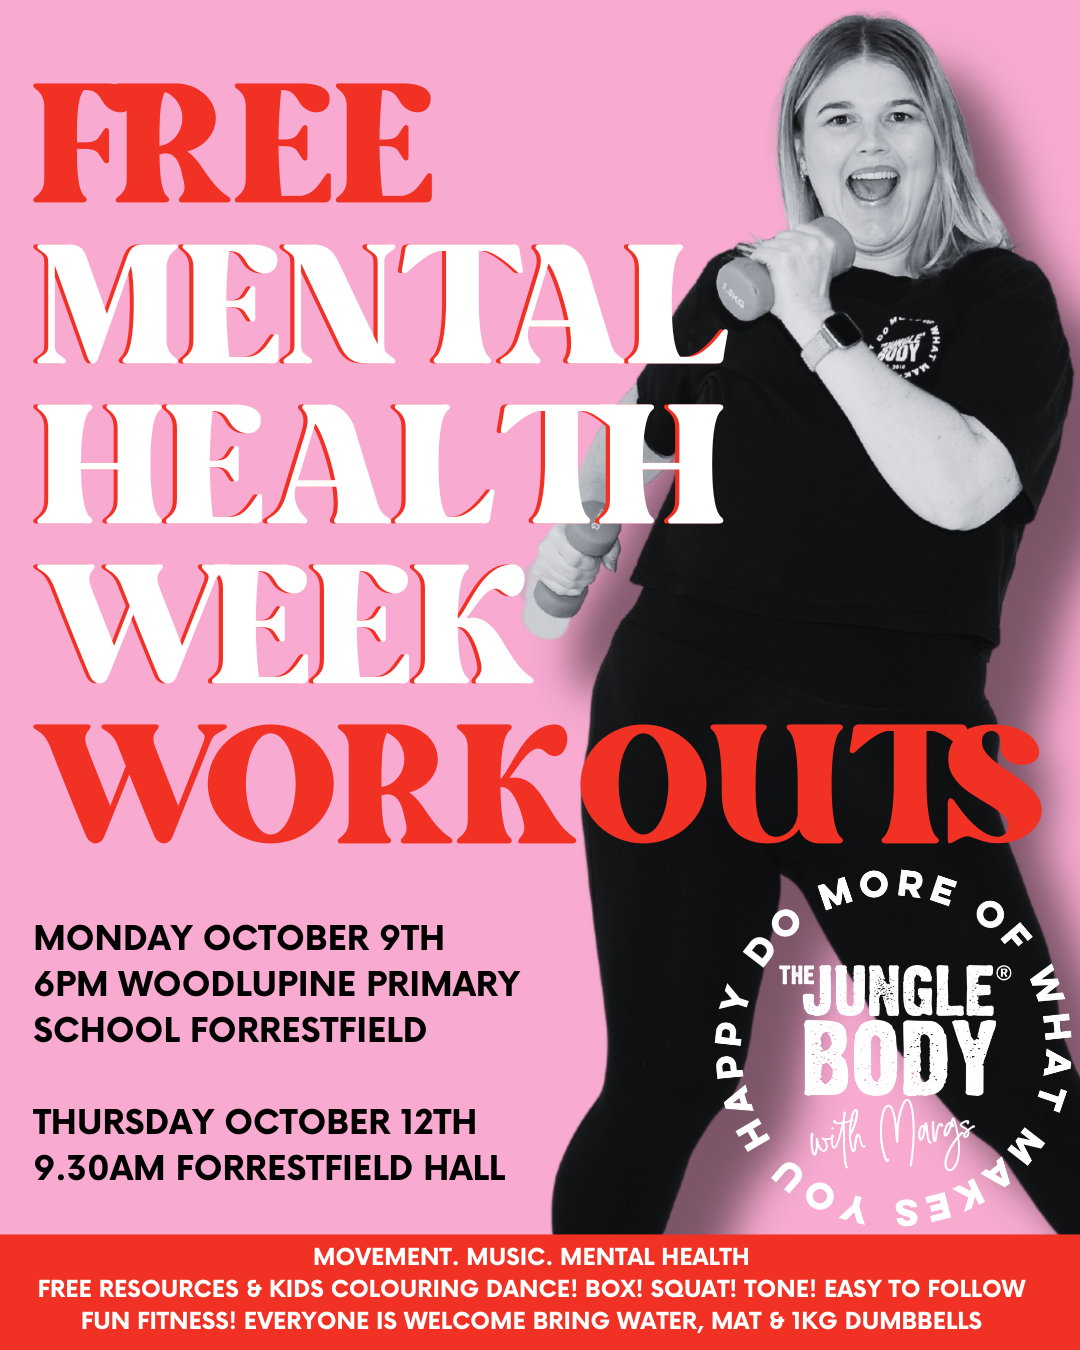 FREE Mental Health Week dance fitness classes